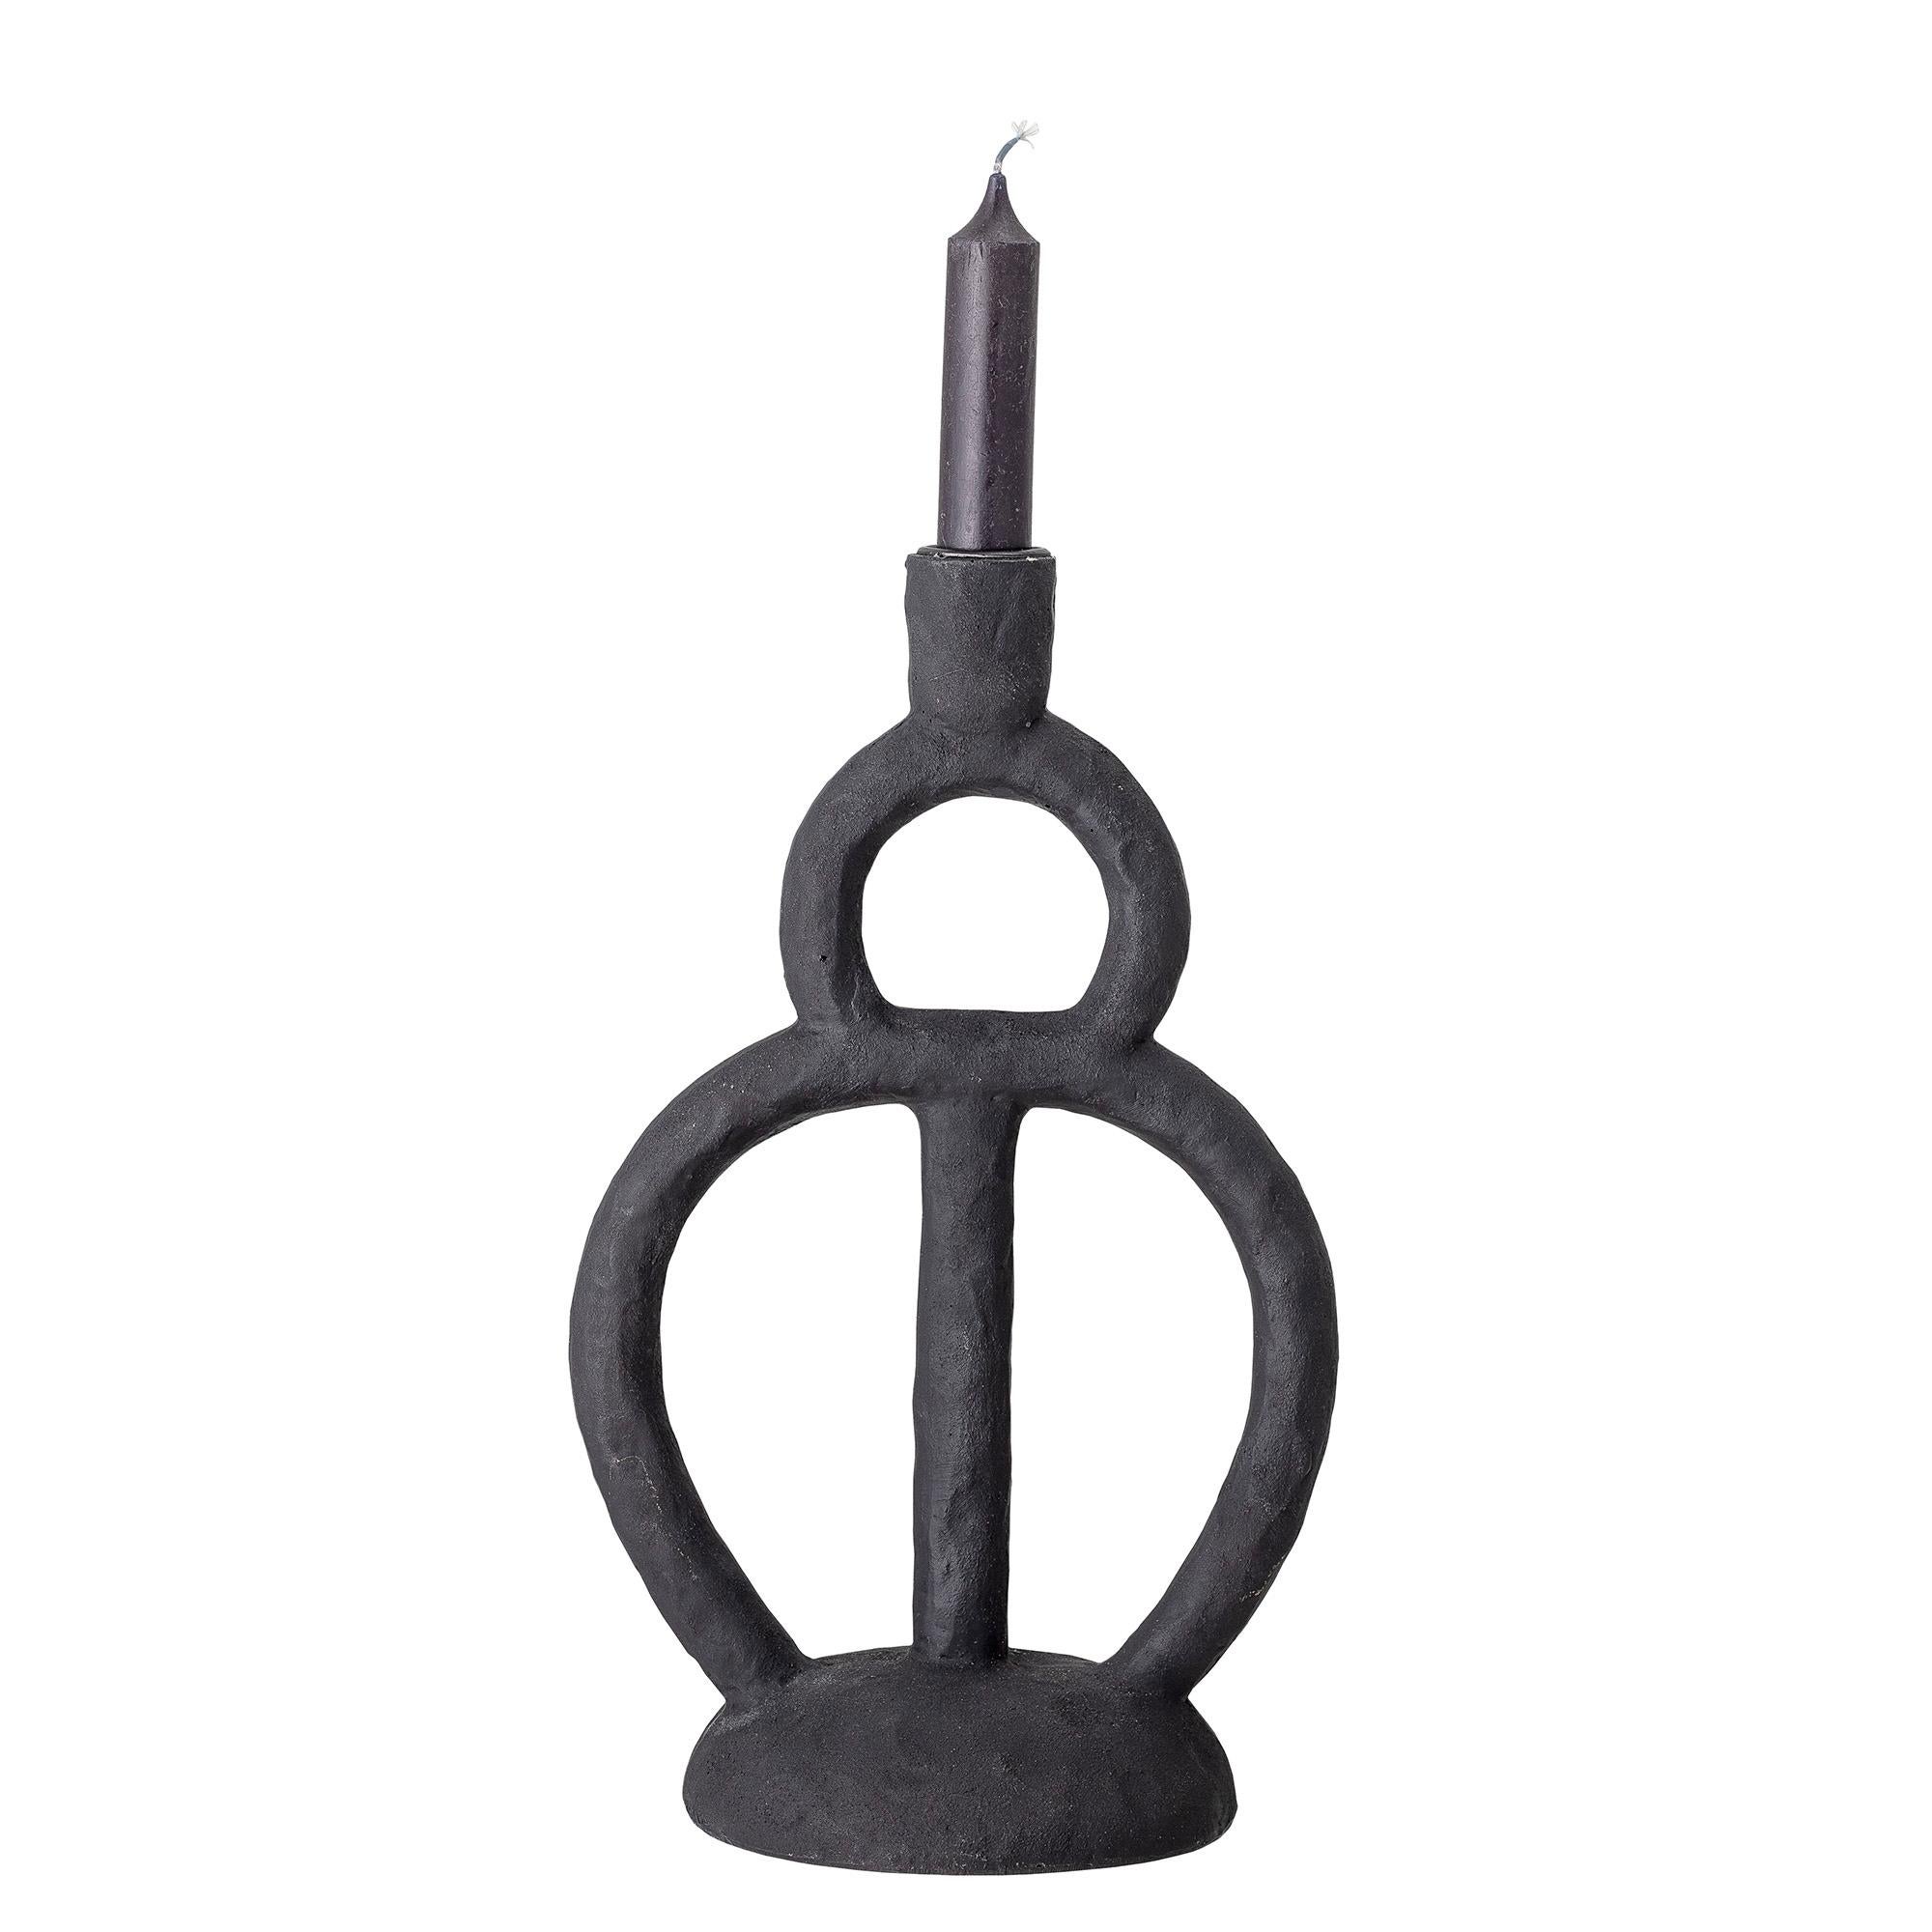 Hand-sculpted black poly resin Brutalist style single stick candleholder.